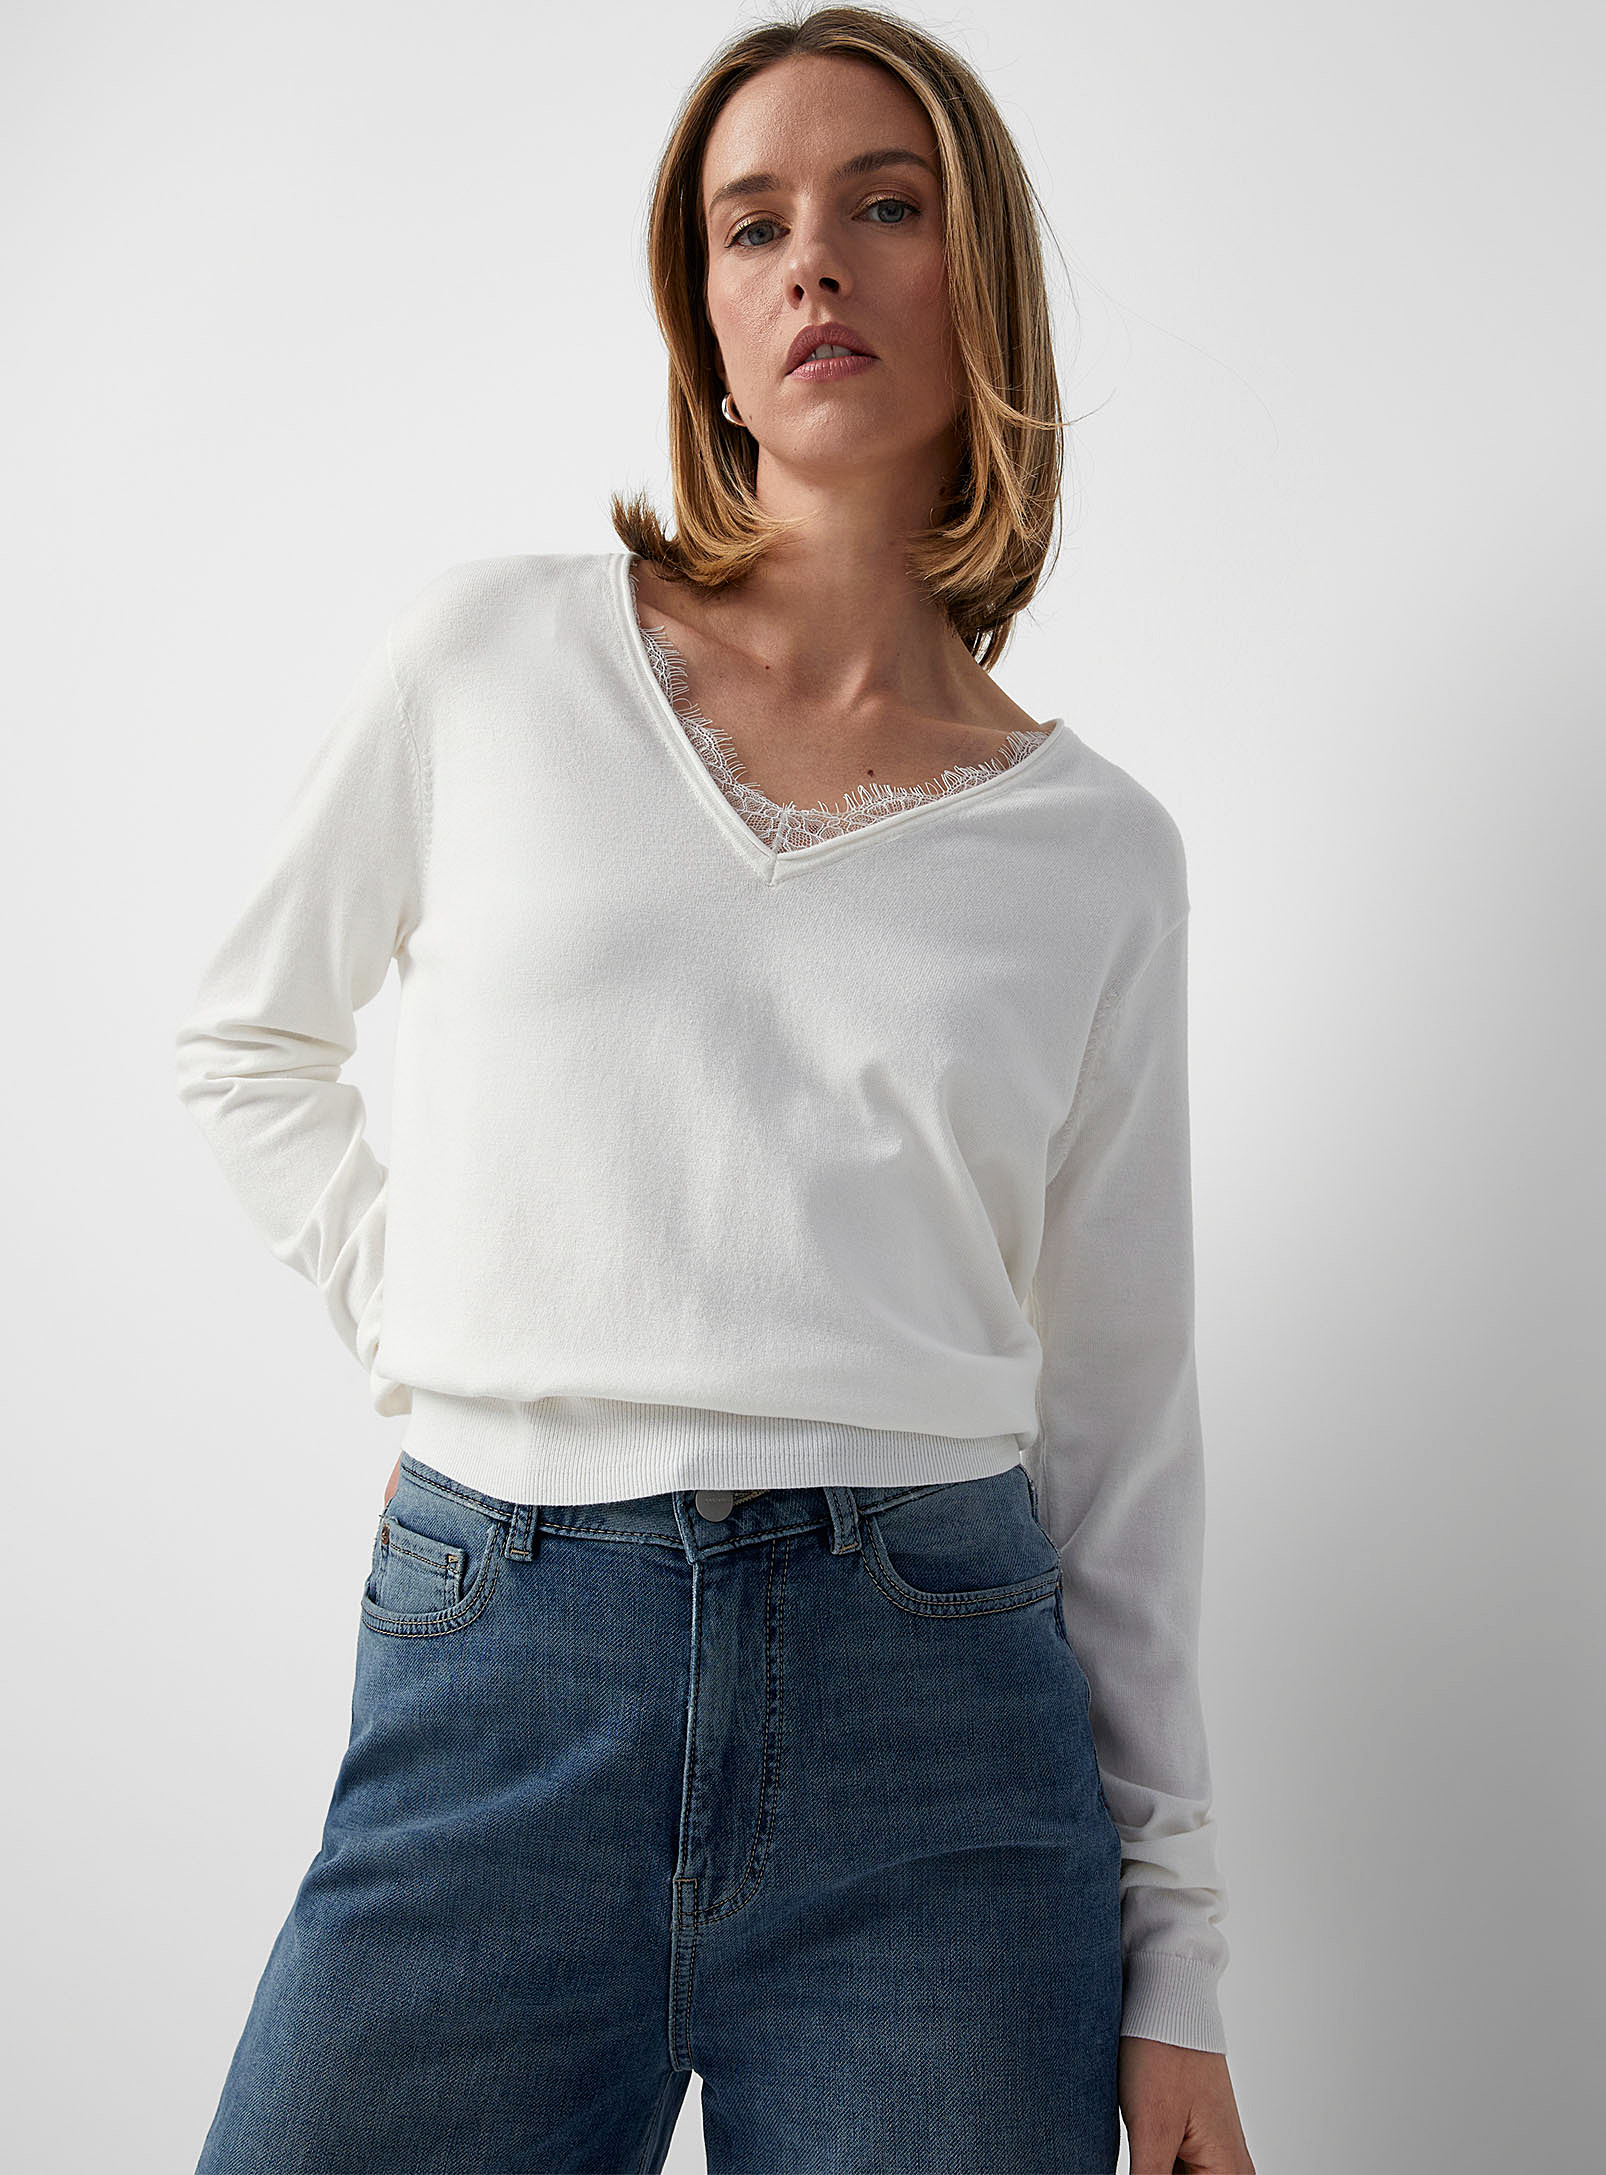 Contemporaine Lace V-neck Sweater In Ivory White